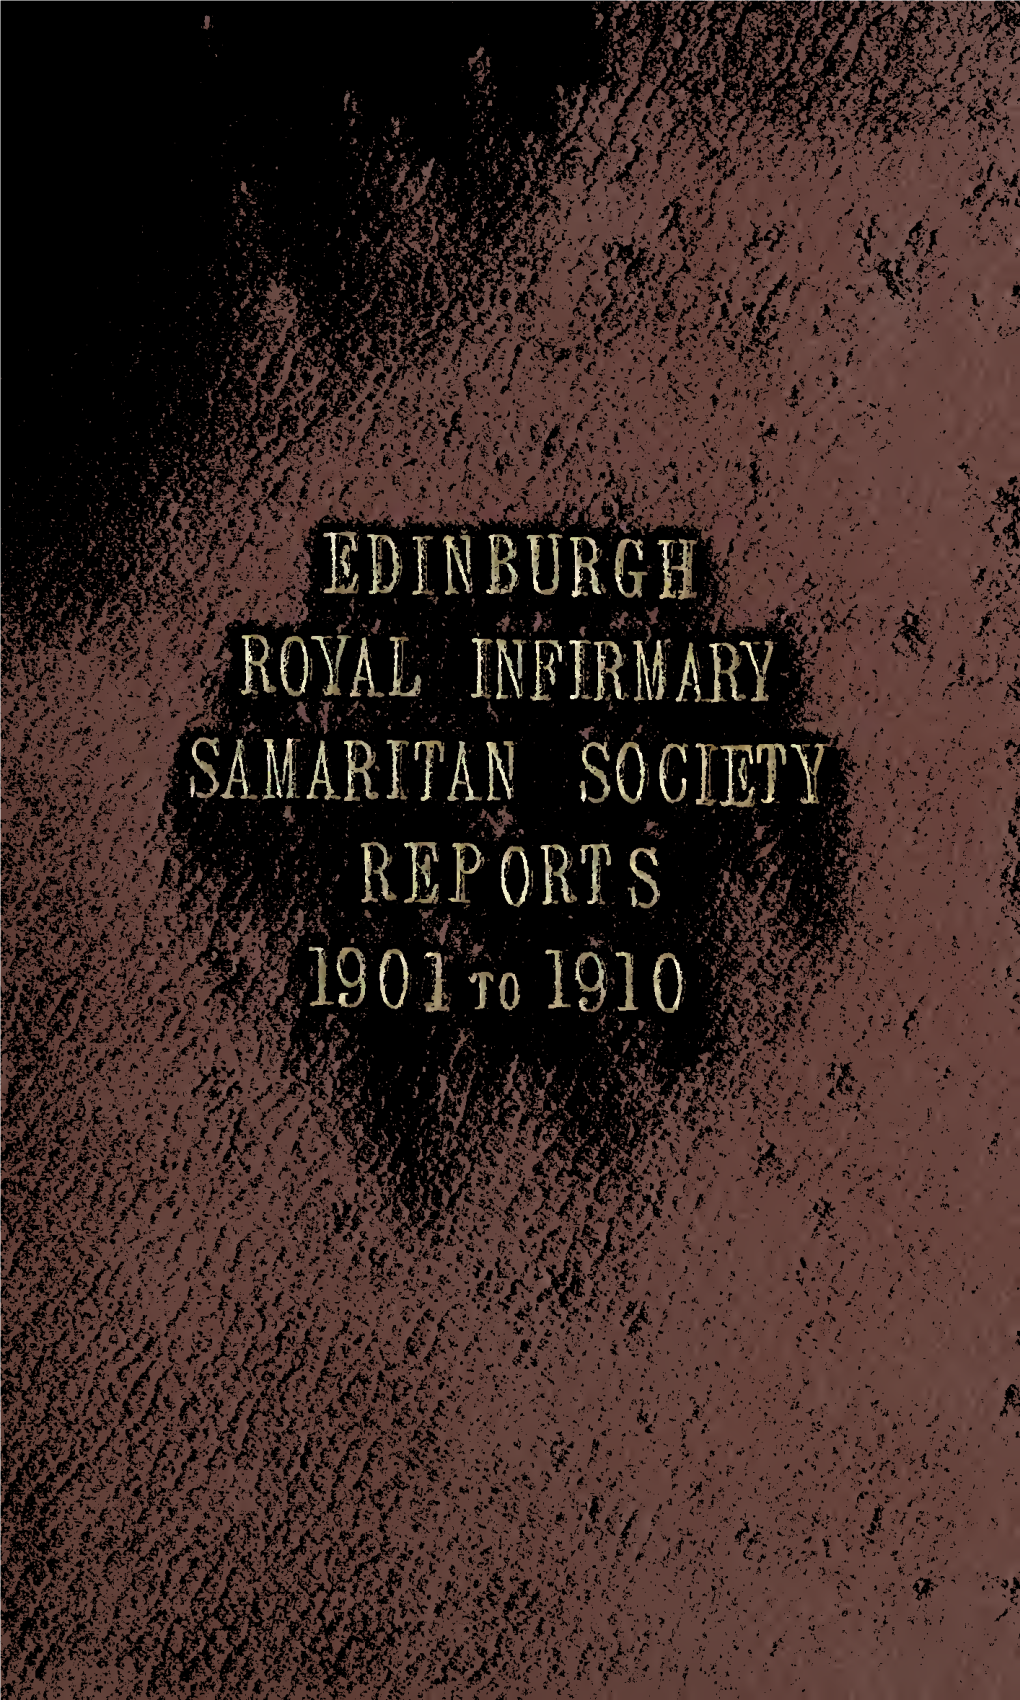 Edinburgh Royal Infirmary a Mari Tan 800] Kty Reports 19